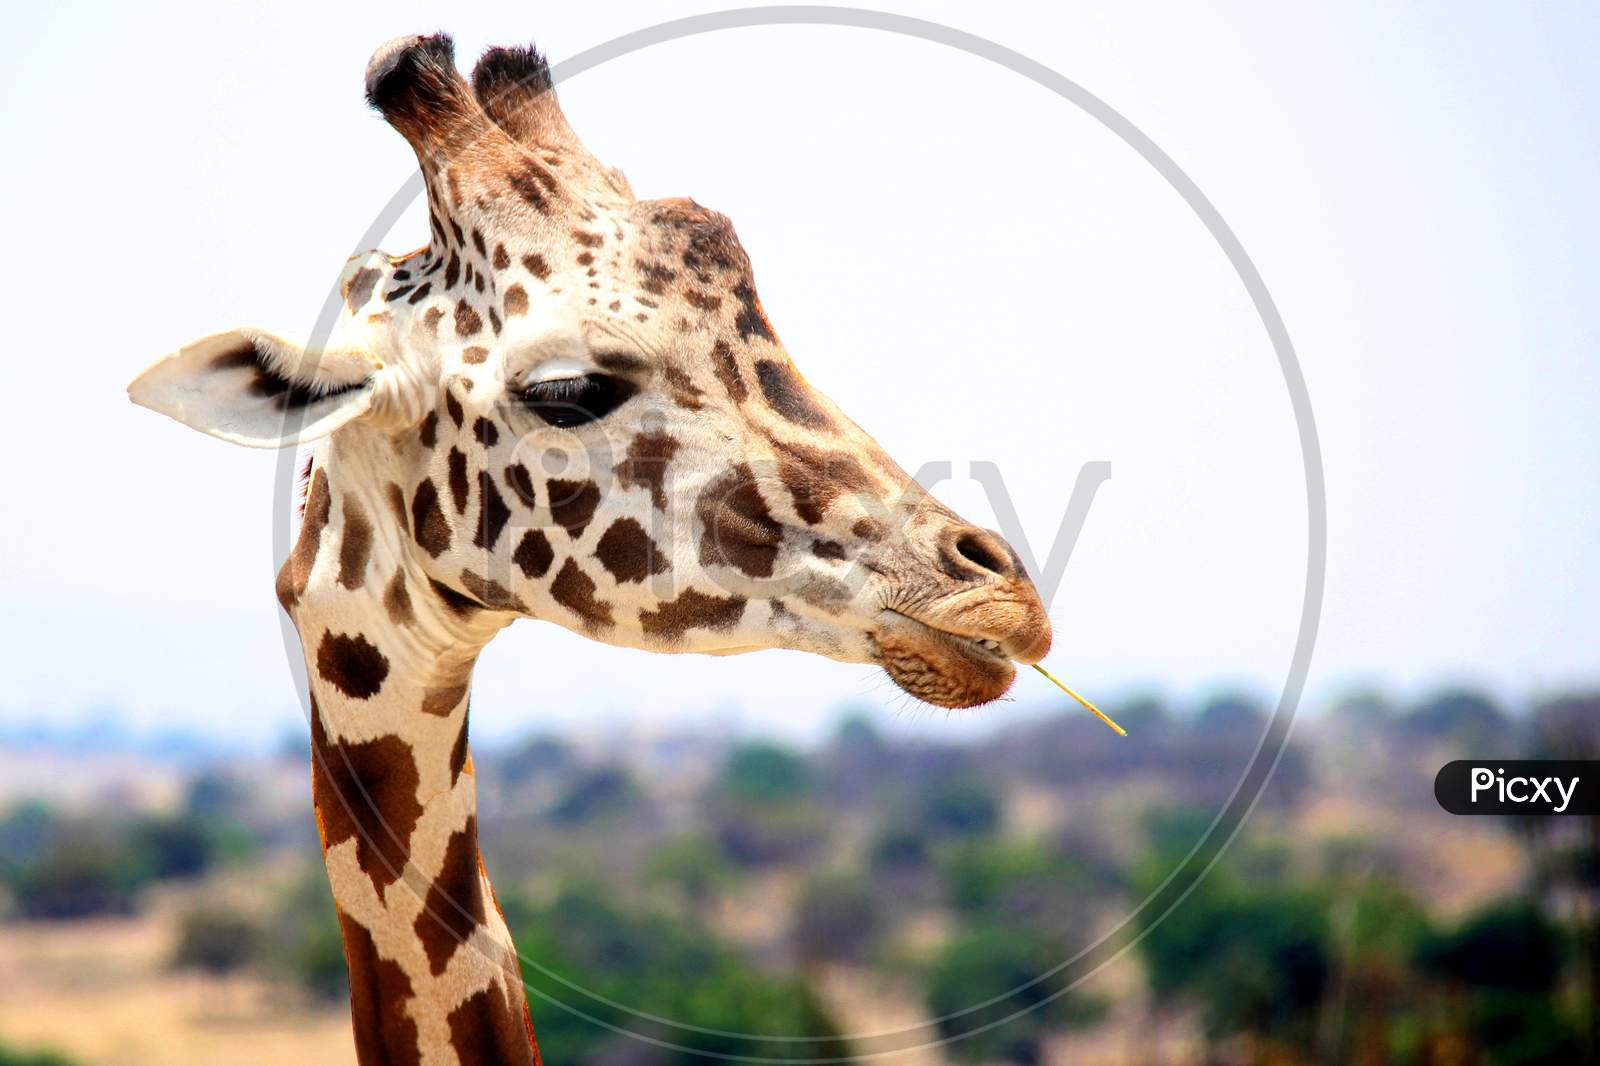 Close up view of Giraffe neck